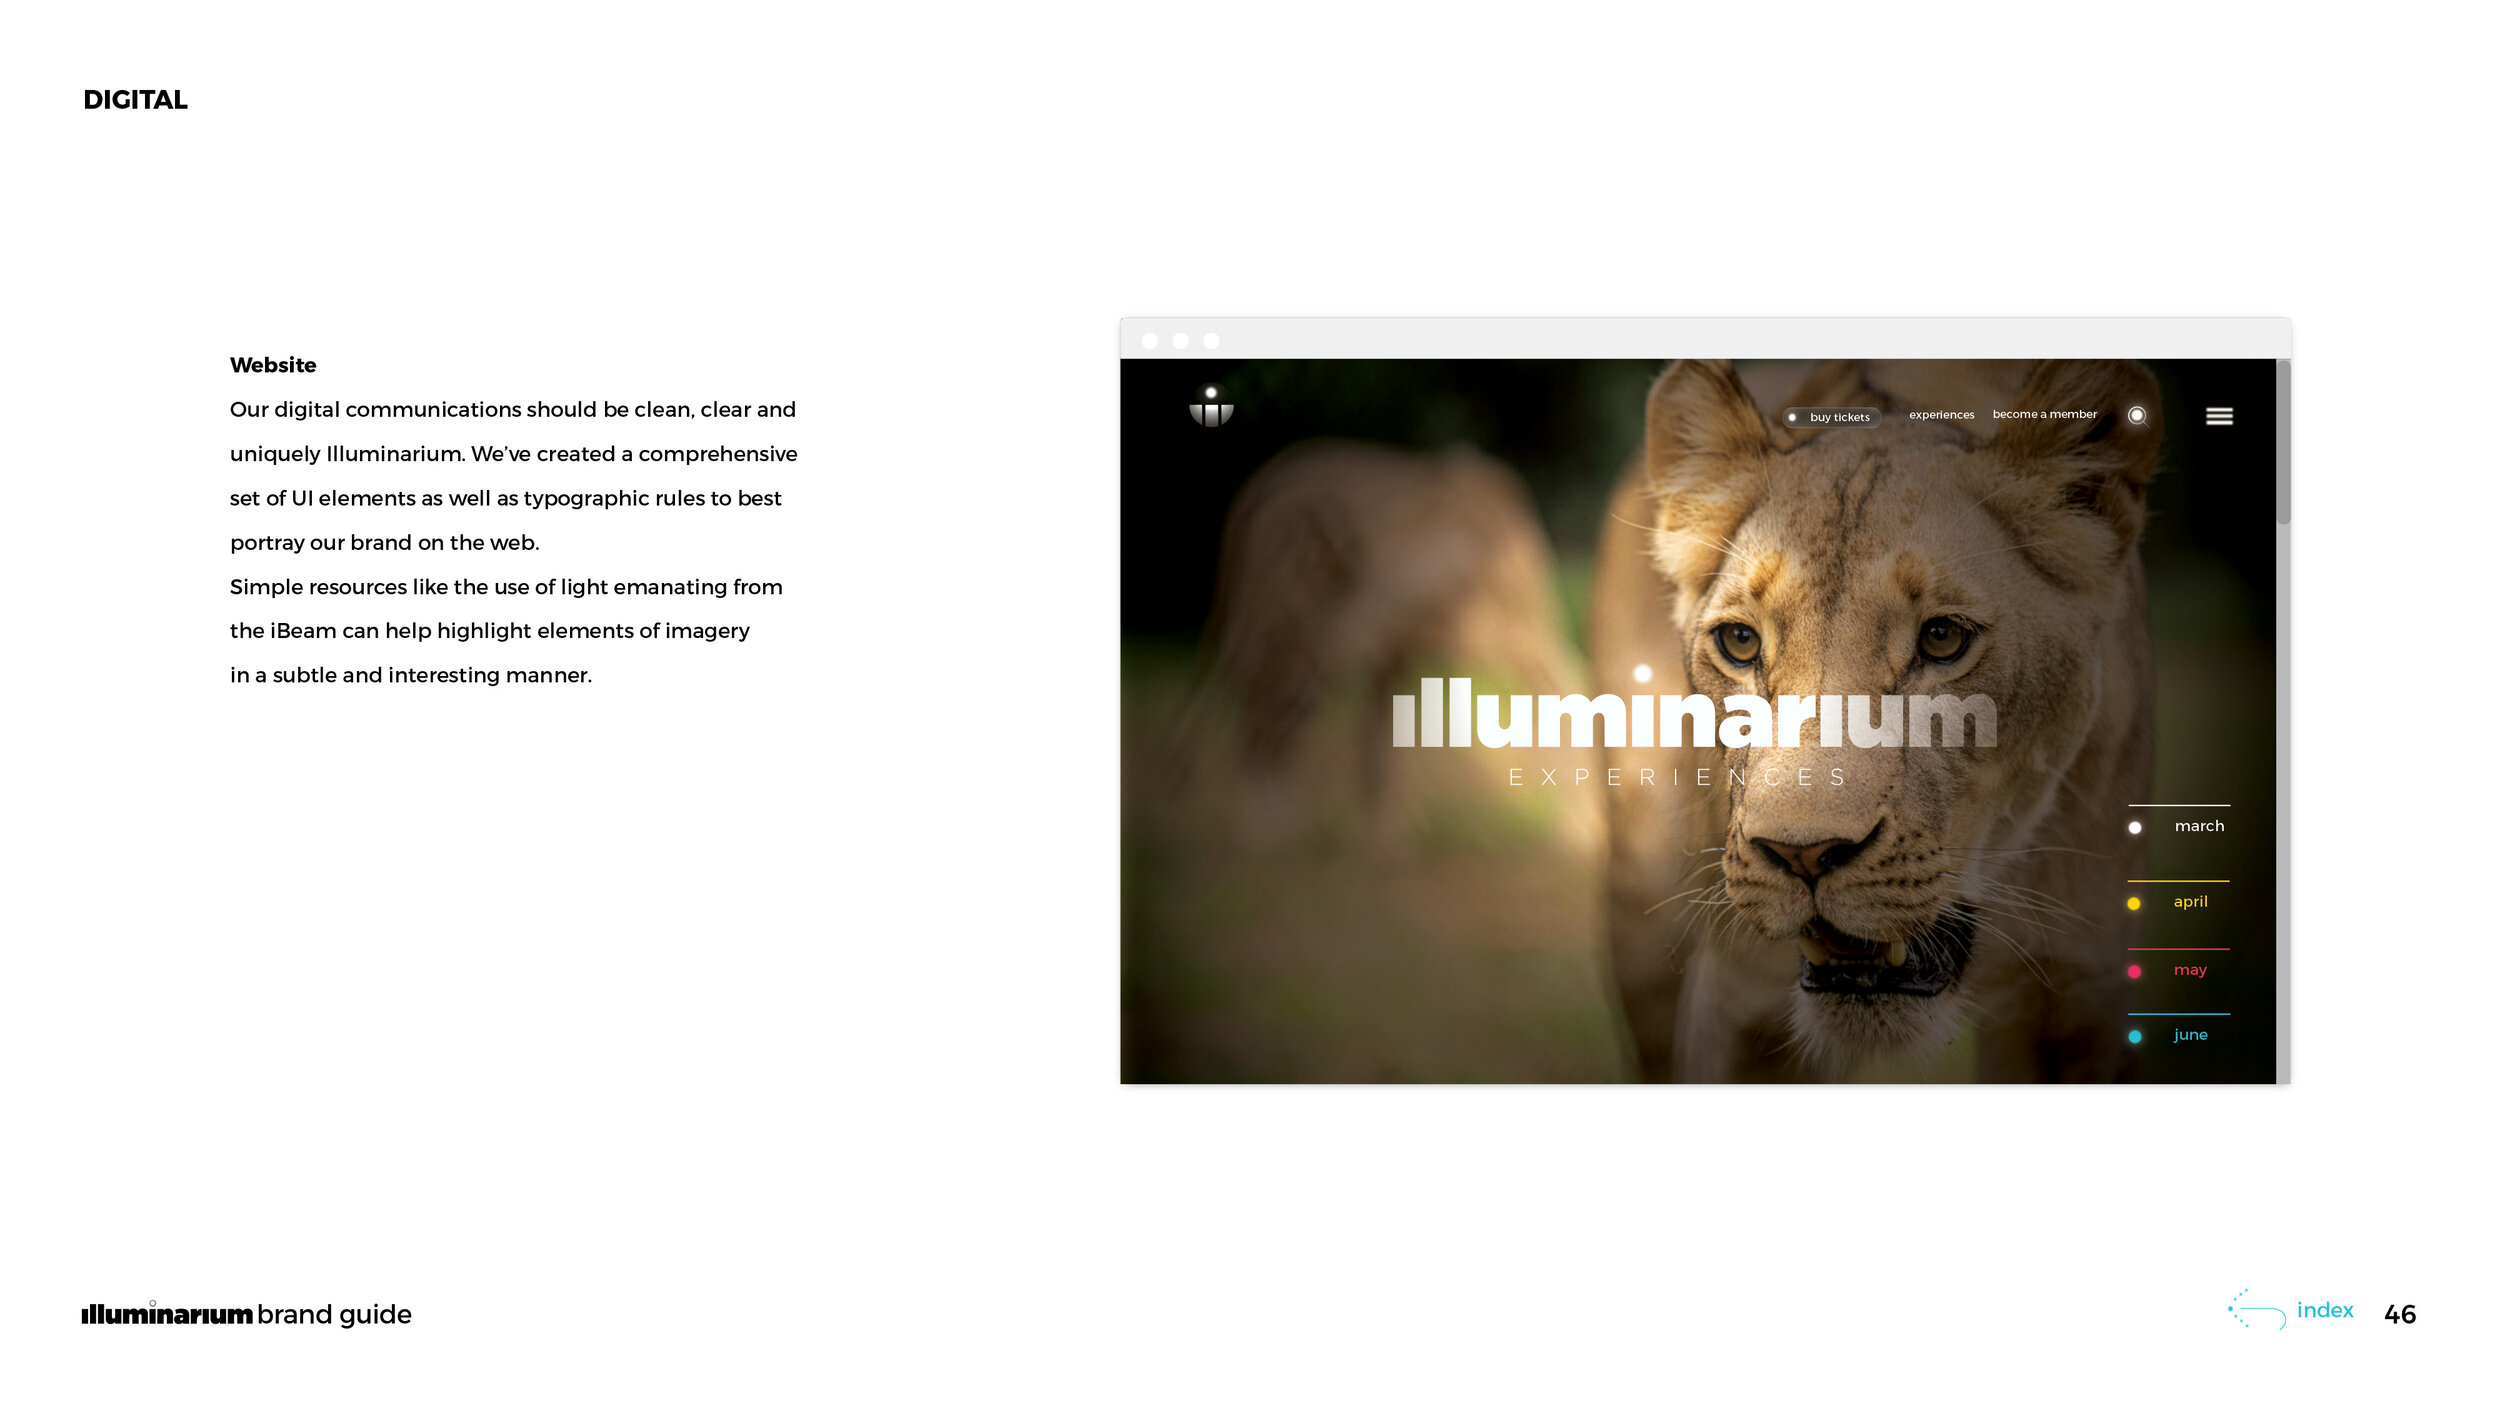 illuminarium_brand guide_16:9_May2020GD_final46.jpg